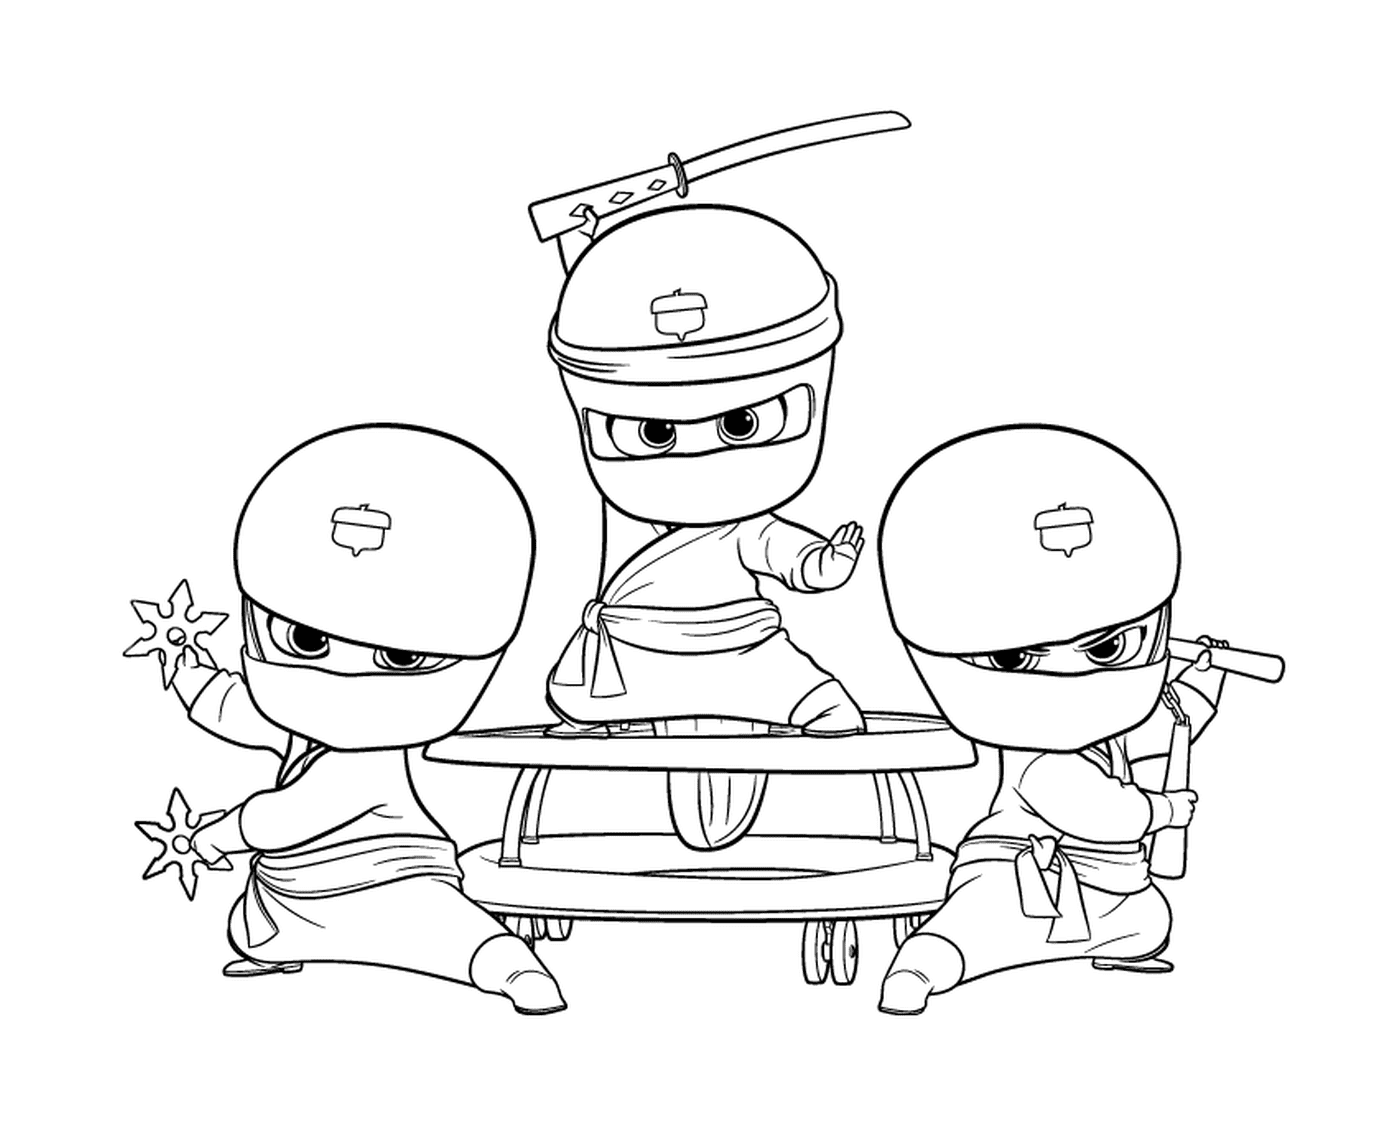  Tres ninjas 